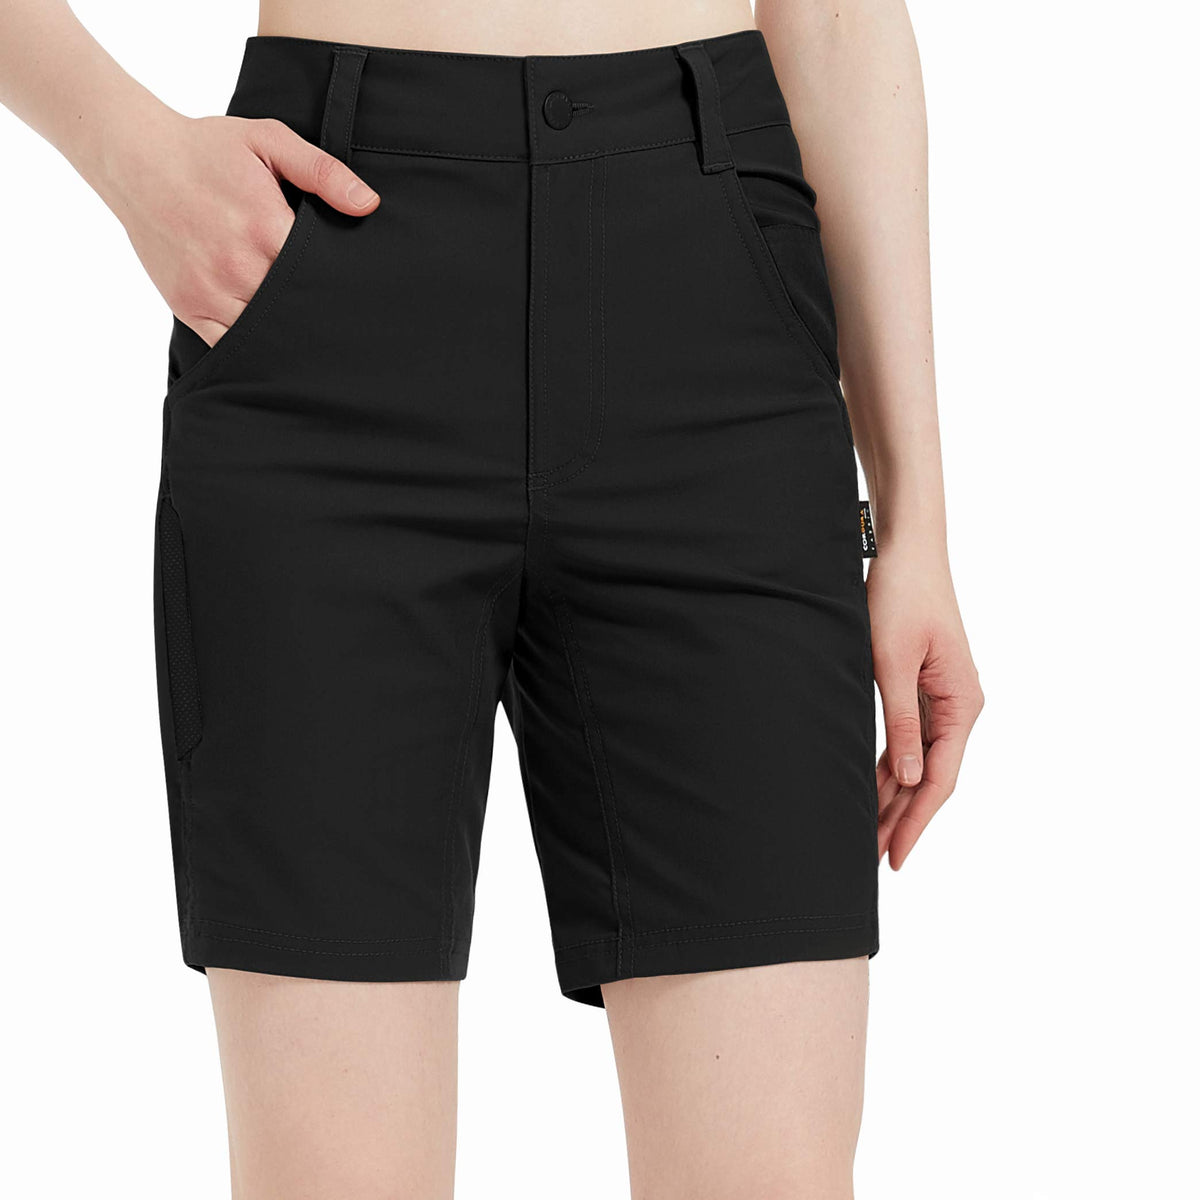 HARDLAND Women's Hiking Cargo Shorts Outdoor Summer Shorts Quick Dry Lightweight